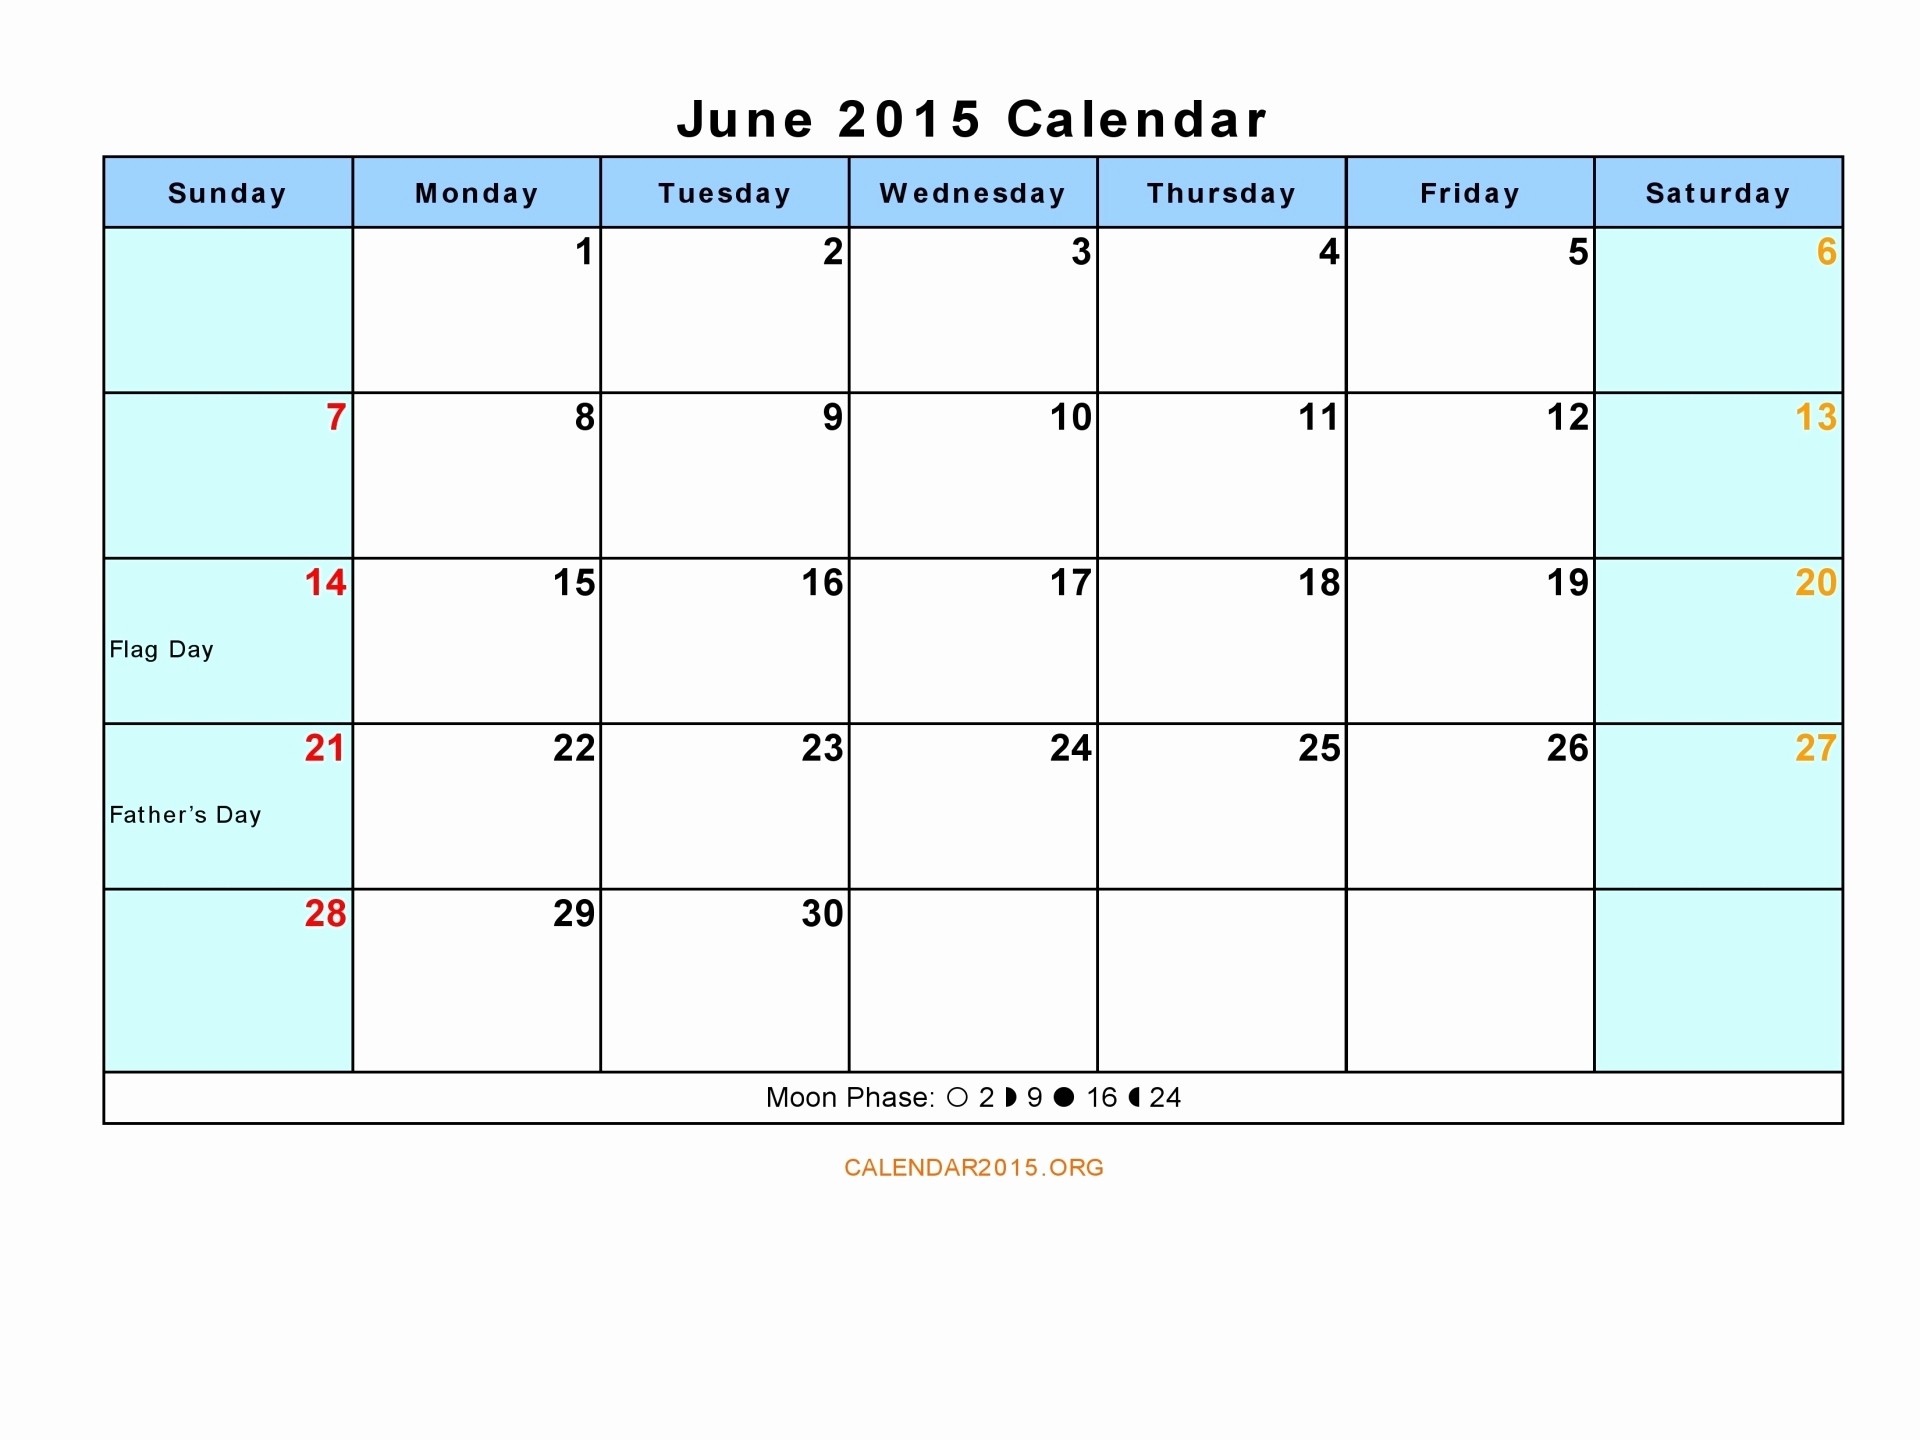 Calendar Template for June 2015 Inspirational June 2015 Driverlayer Search Engine